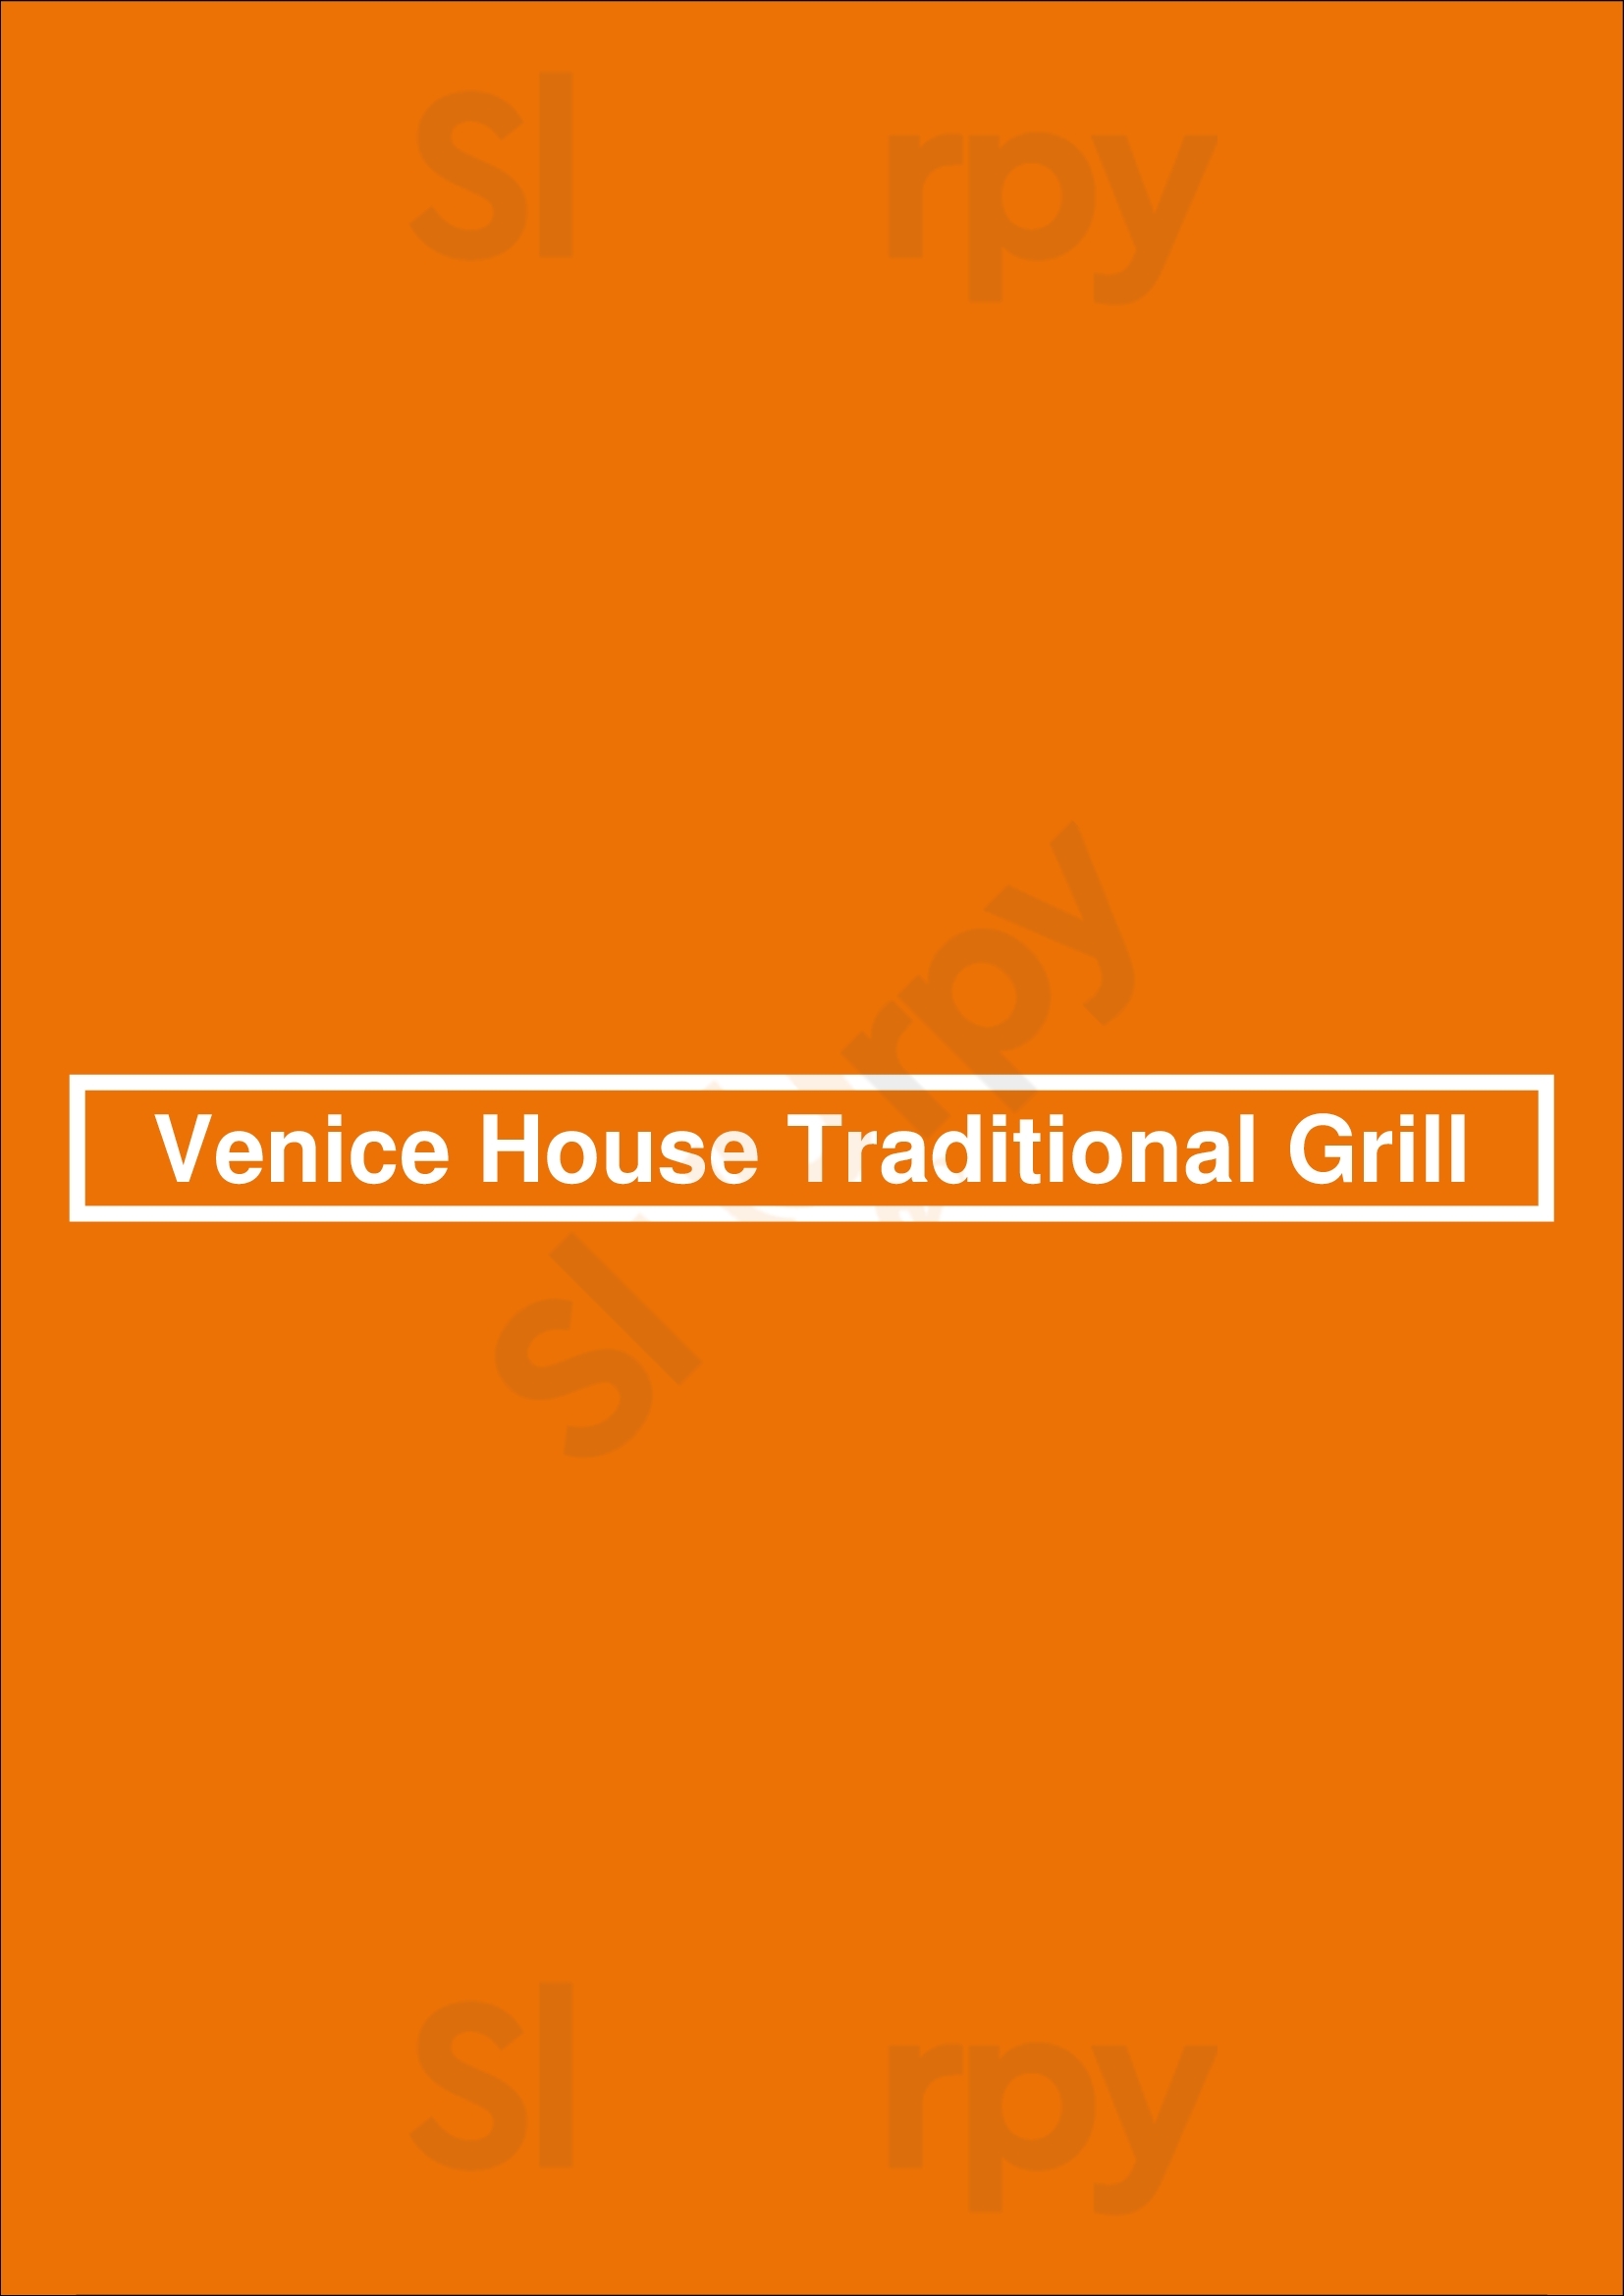 Venice House Traditional Grill Saskatoon Menu - 1